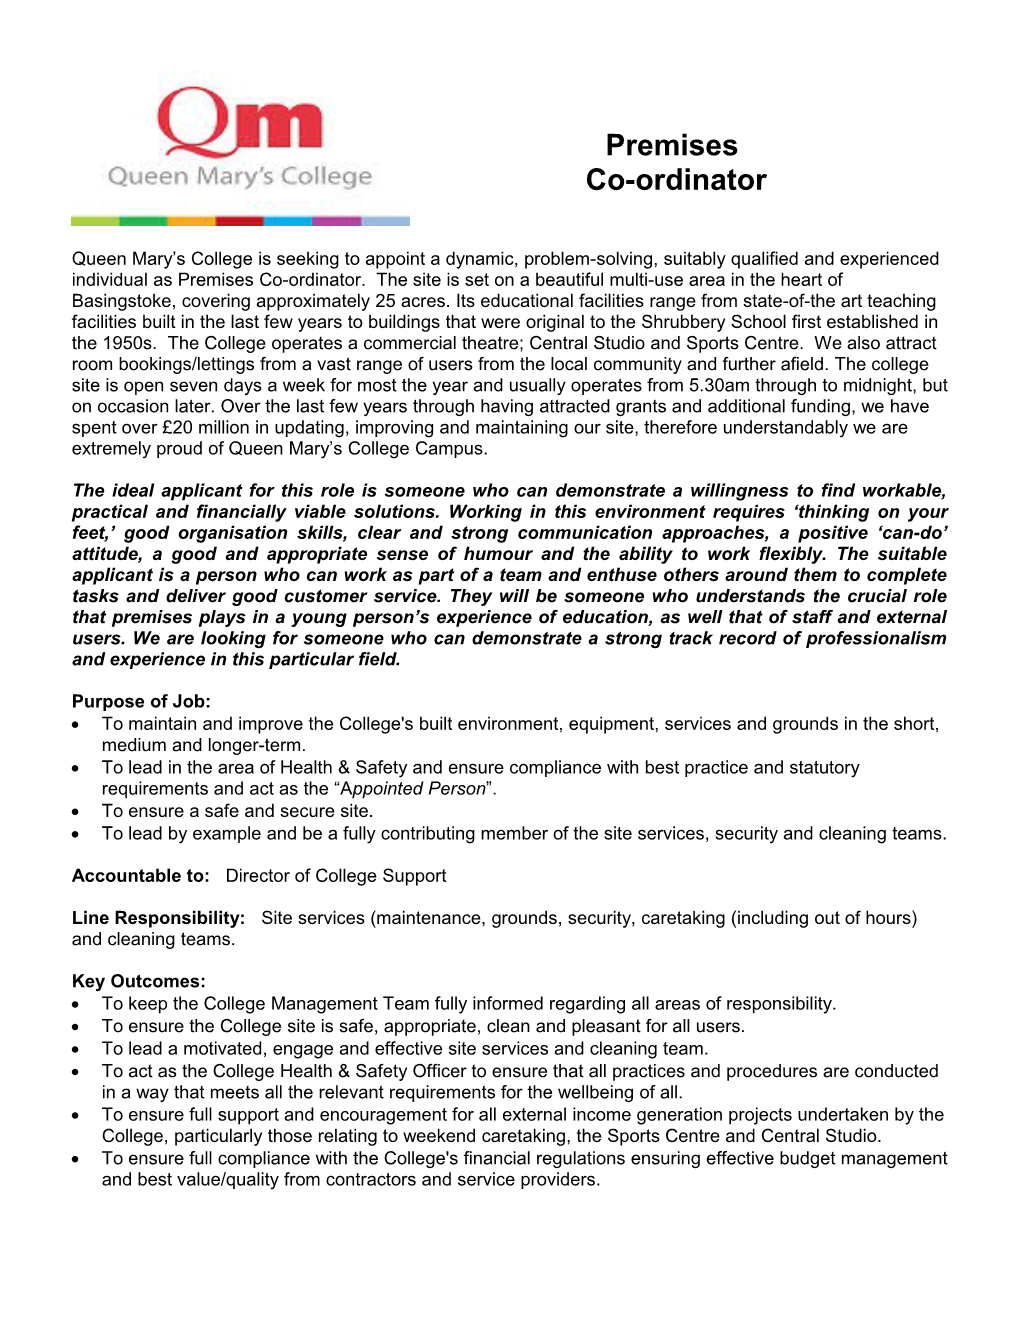 Job Description - Site Services Coordinator